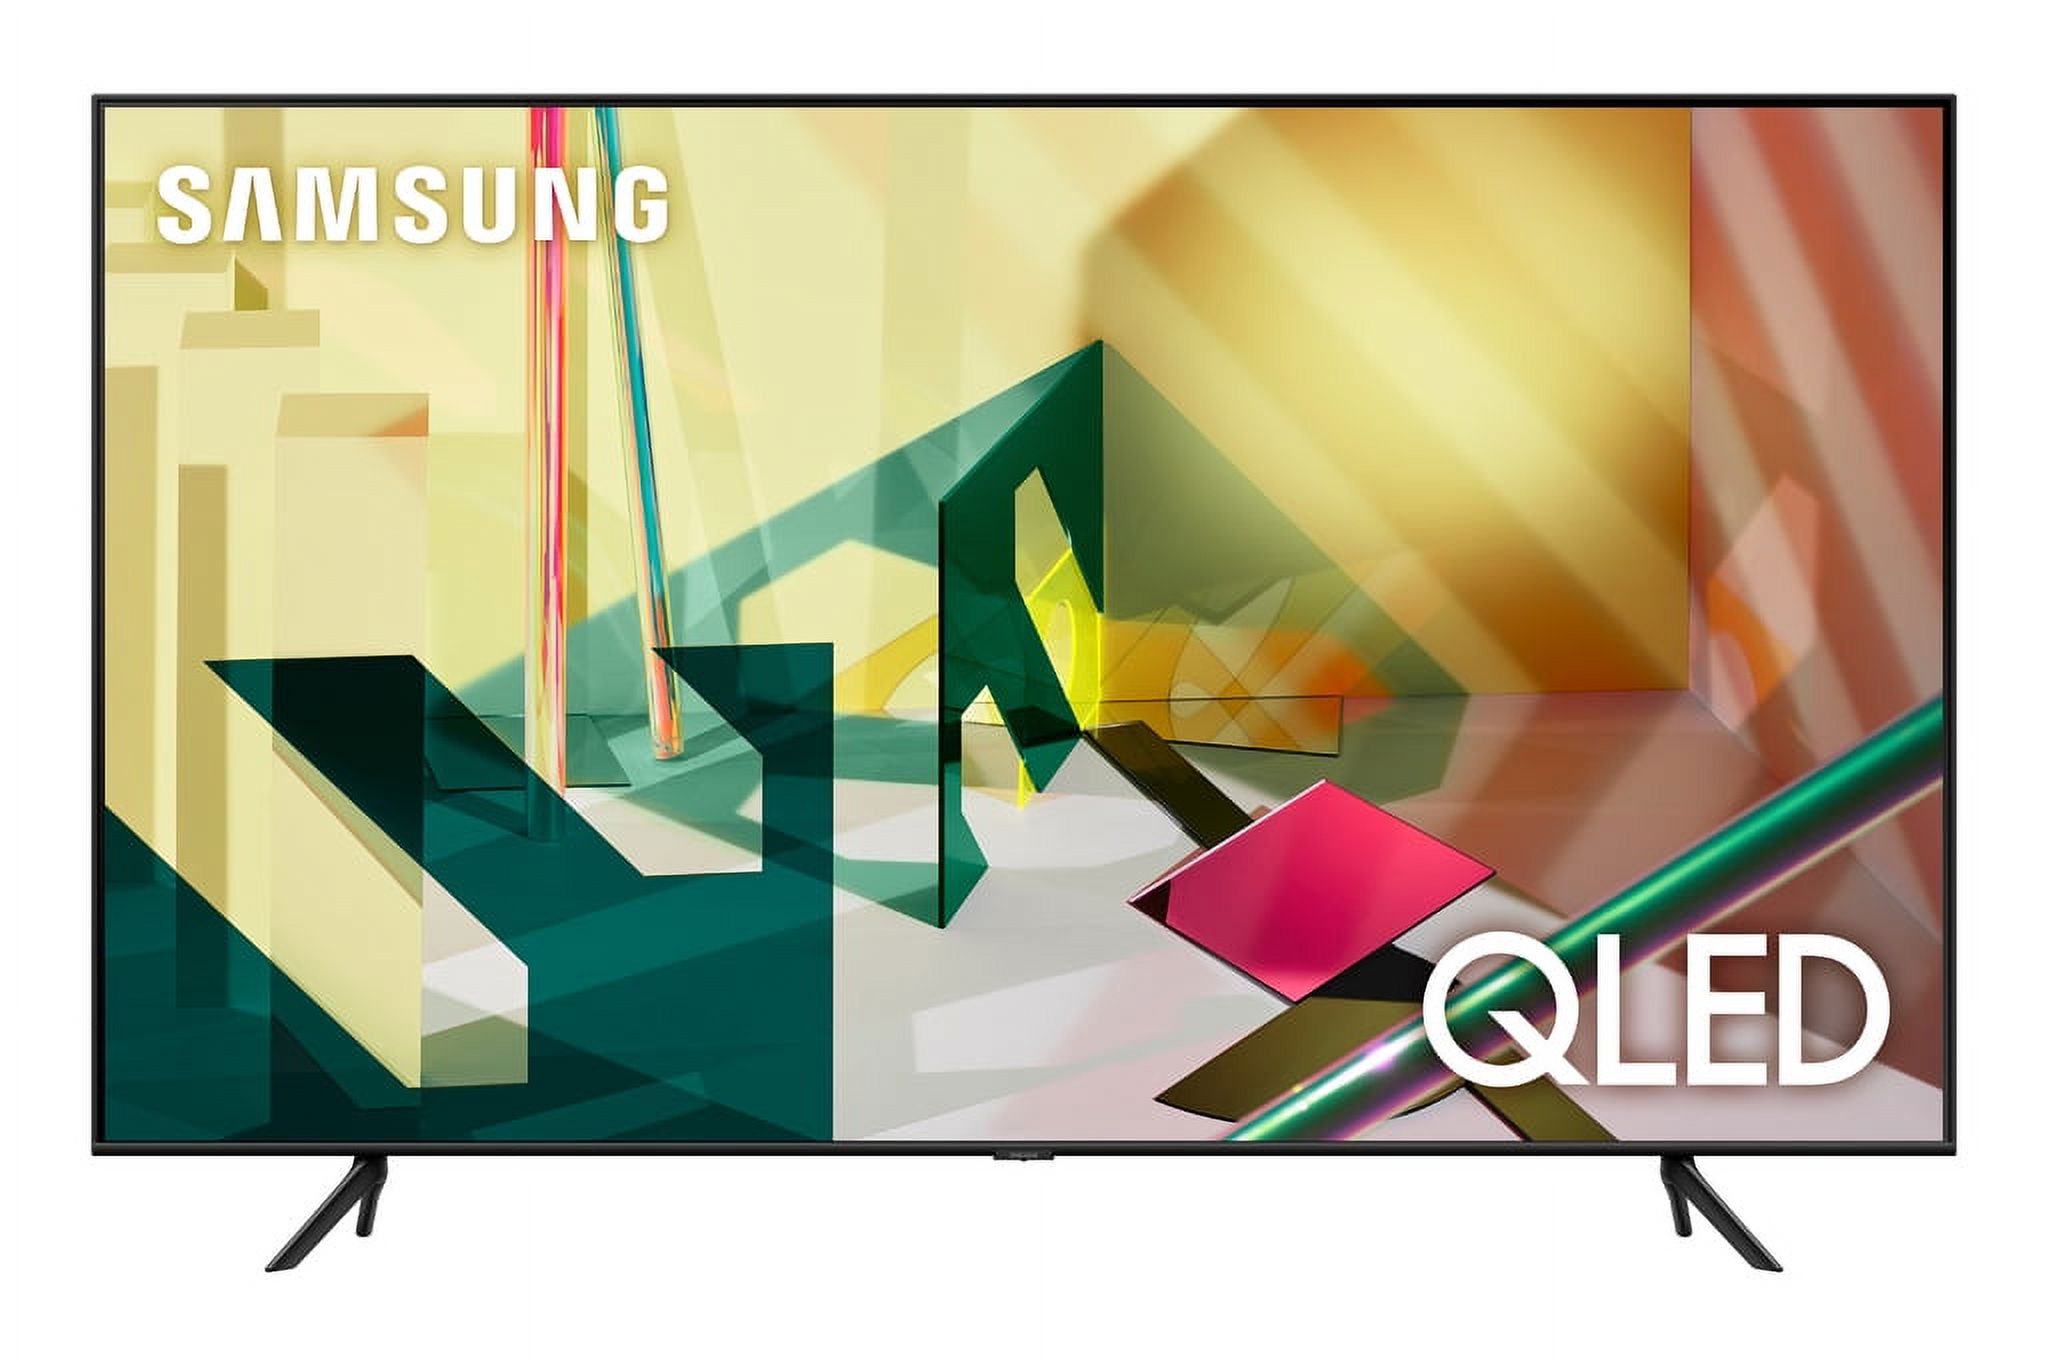 SAMSUNG 75” Class 4K Ultra HD (2160P) HDR Smart QLED TV QN75Q70T 2020 - image 1 of 18